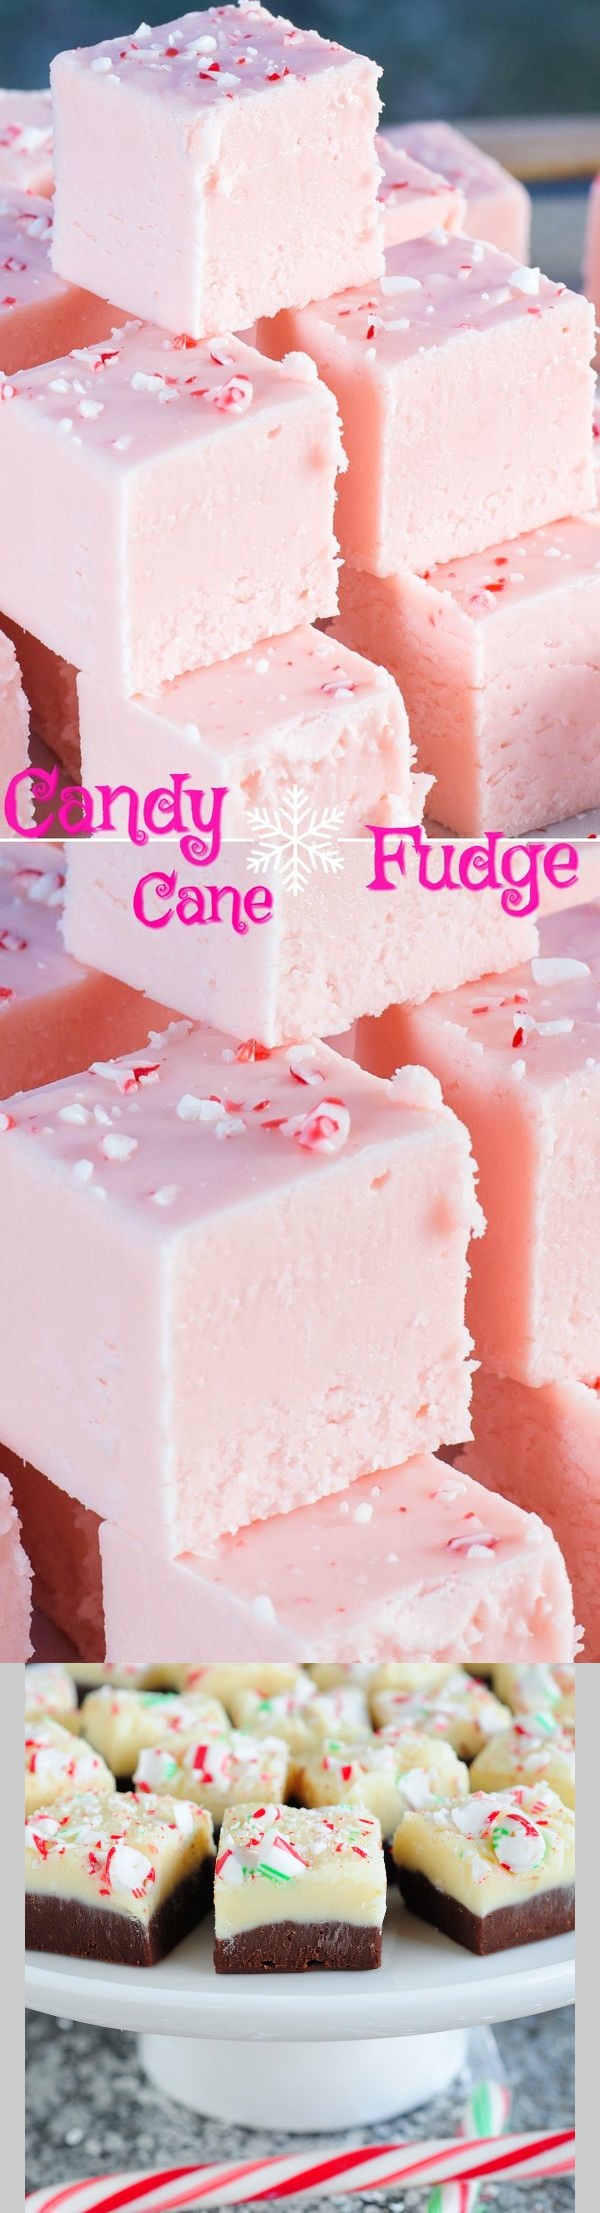 Candy Cane Fudge